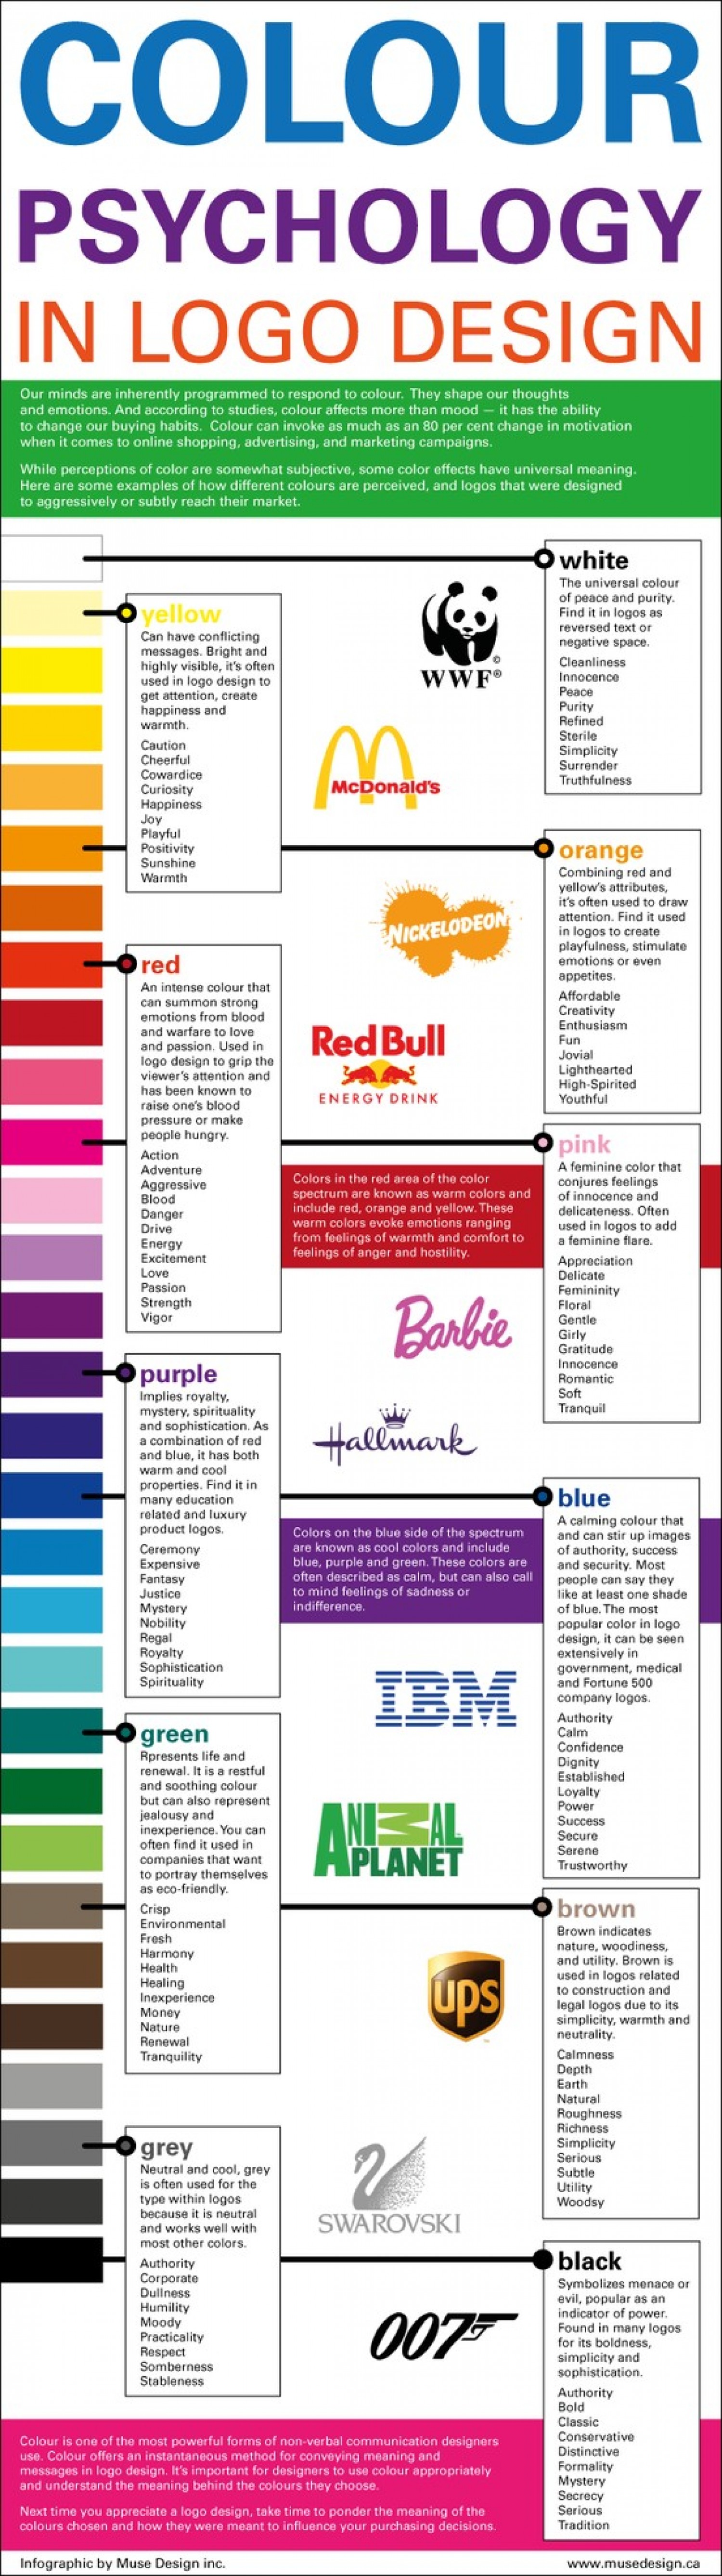 color-psychology-in-logo-design_5030f8bf7a1e7_w1500.jpg